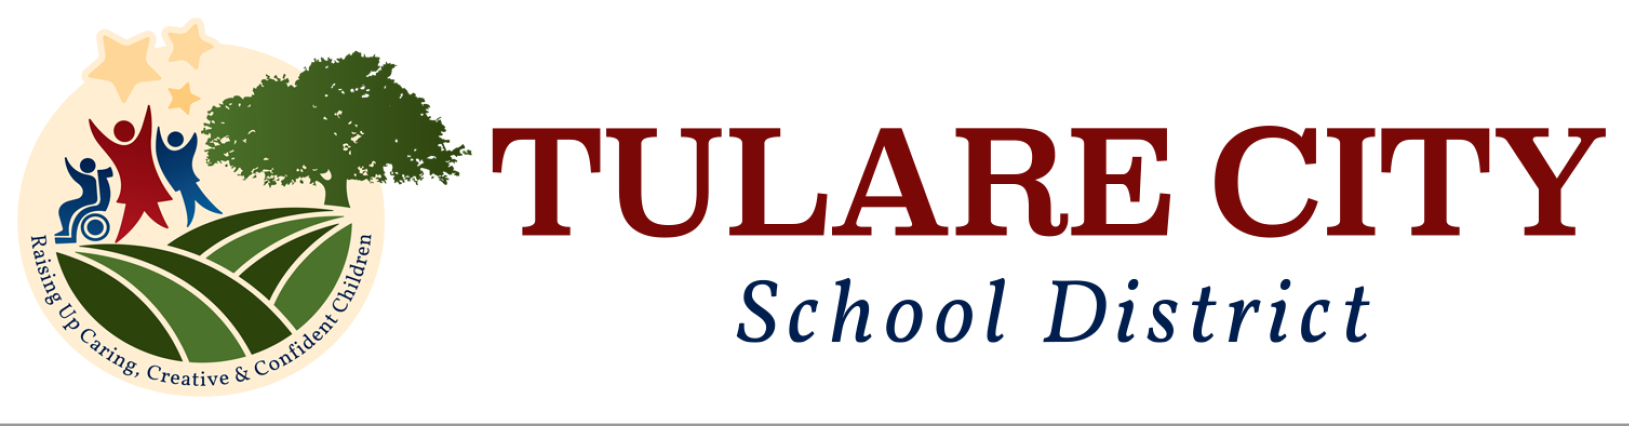 Tulare City School District Logo